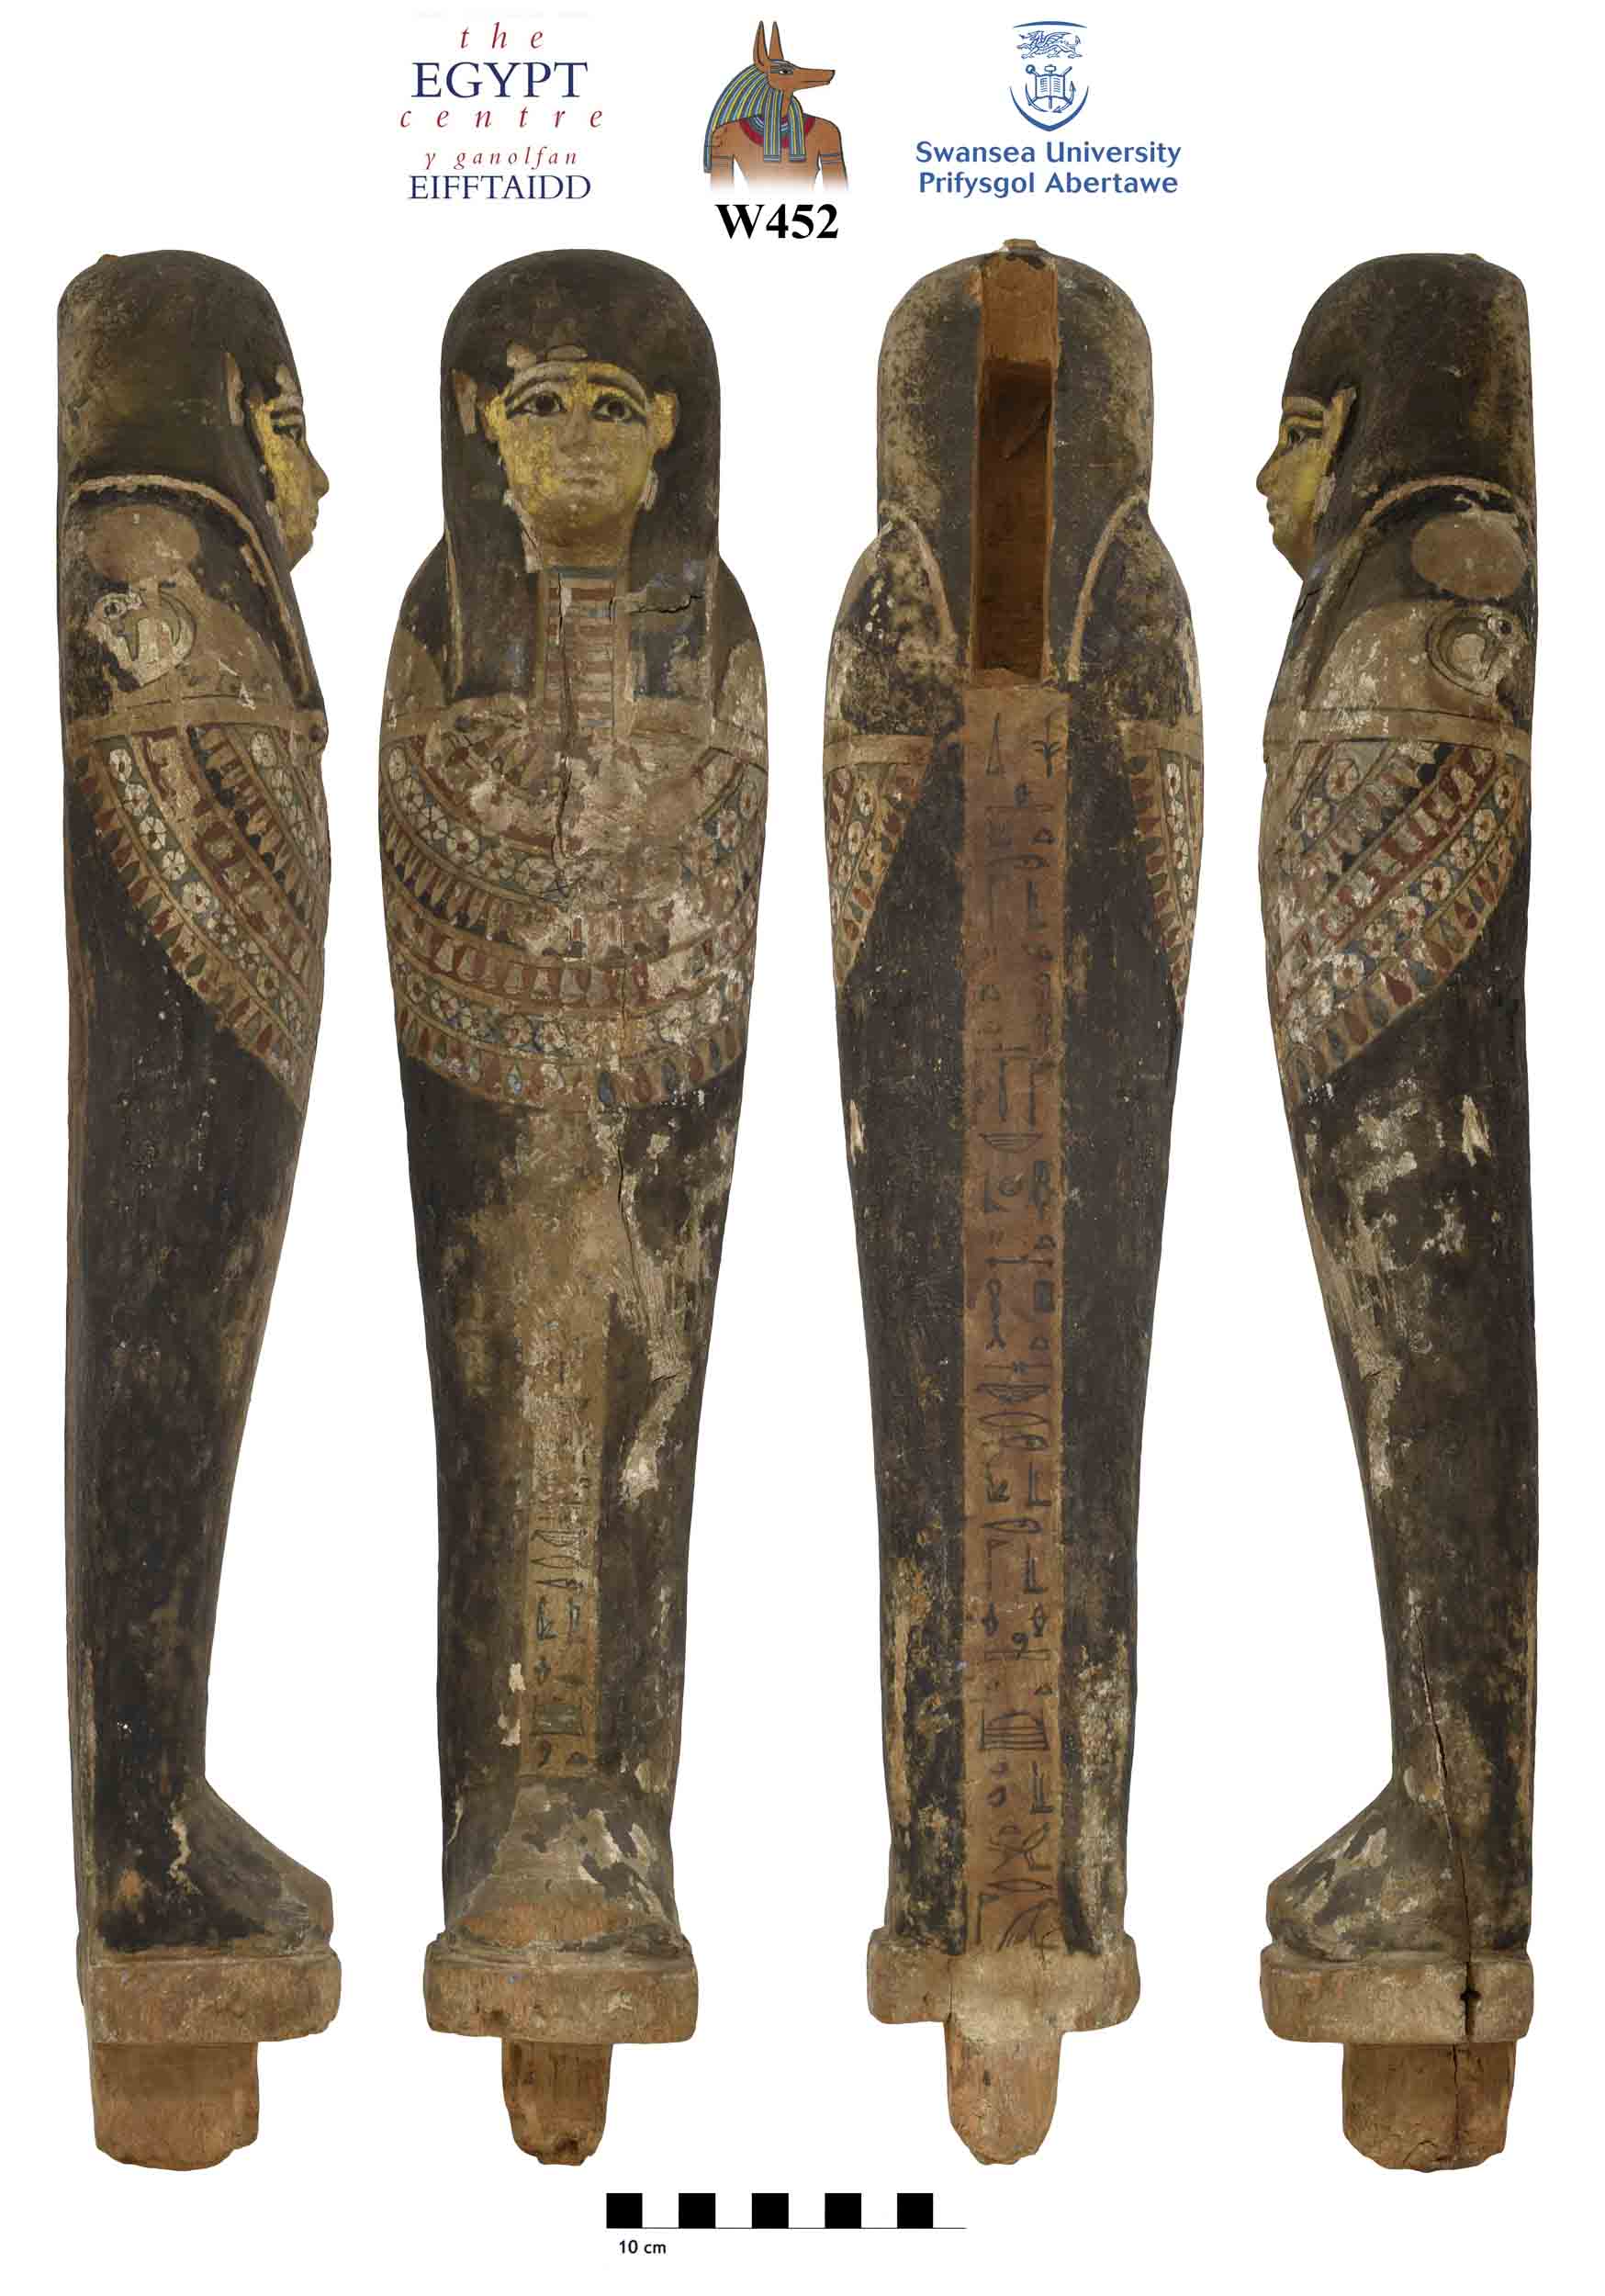 Image for: Ptah-Sokar-Osiris statue